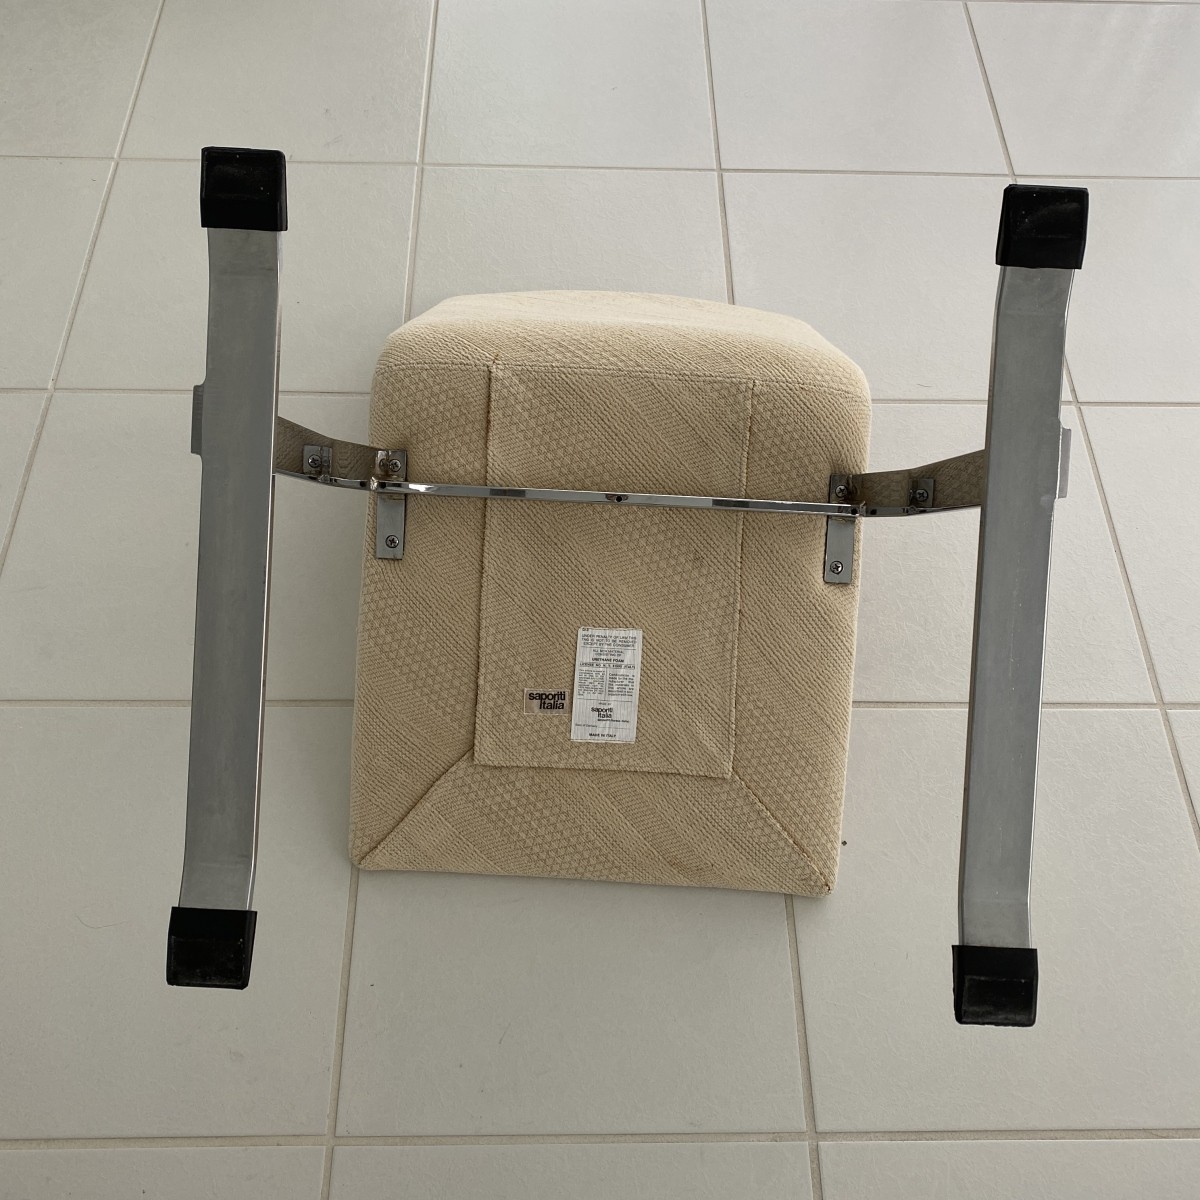 (4) Saporiti Chrome Side Chairs